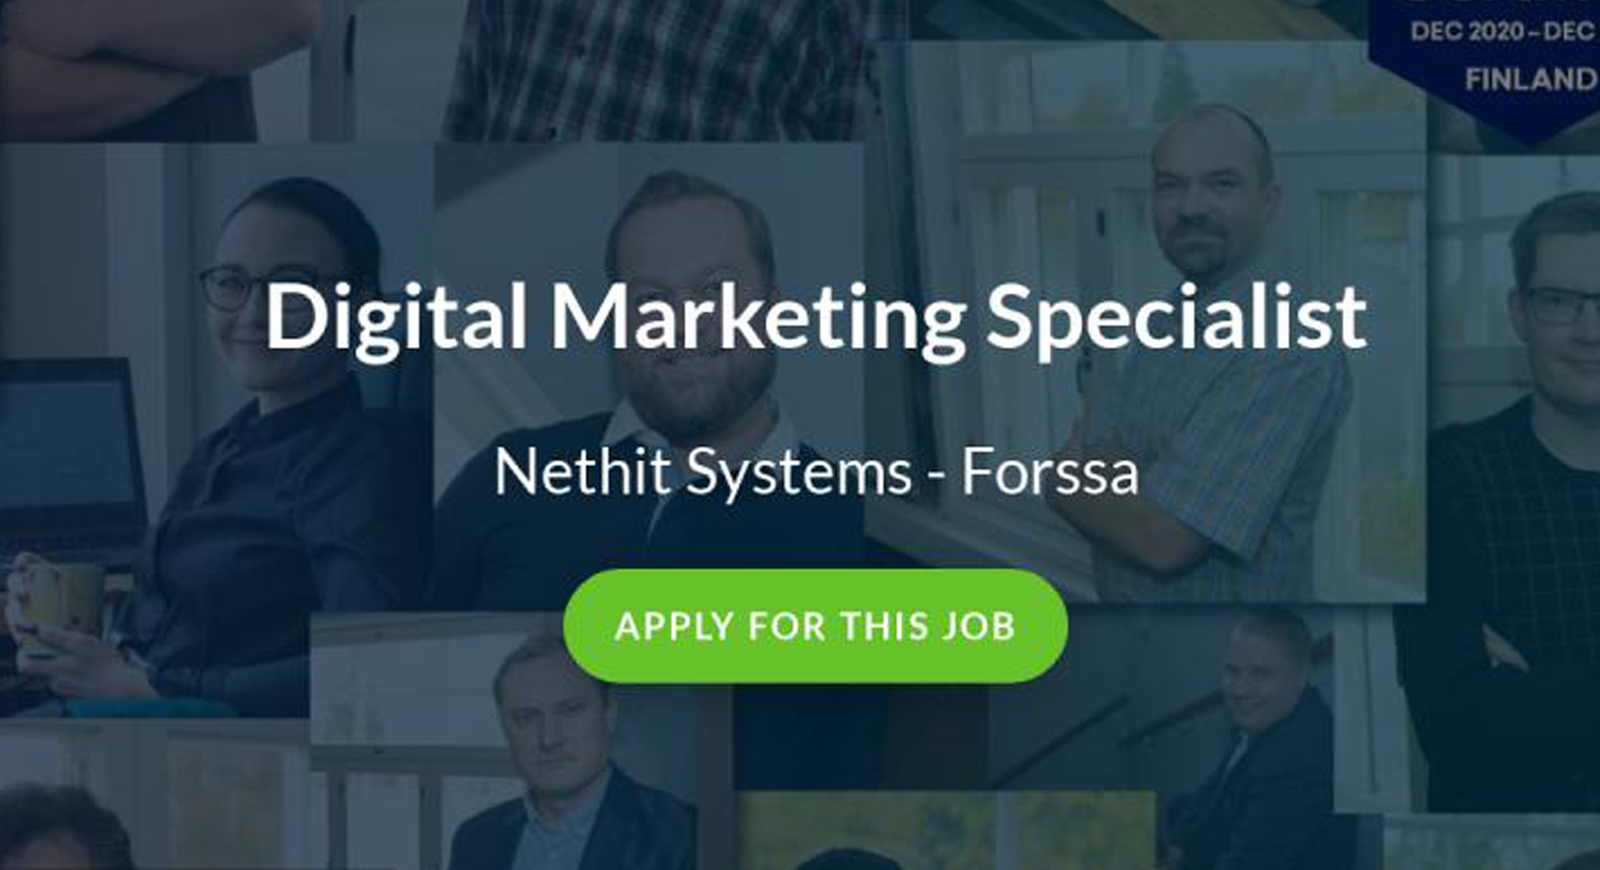 Digital Marketing Specialist to Nethit Systems 